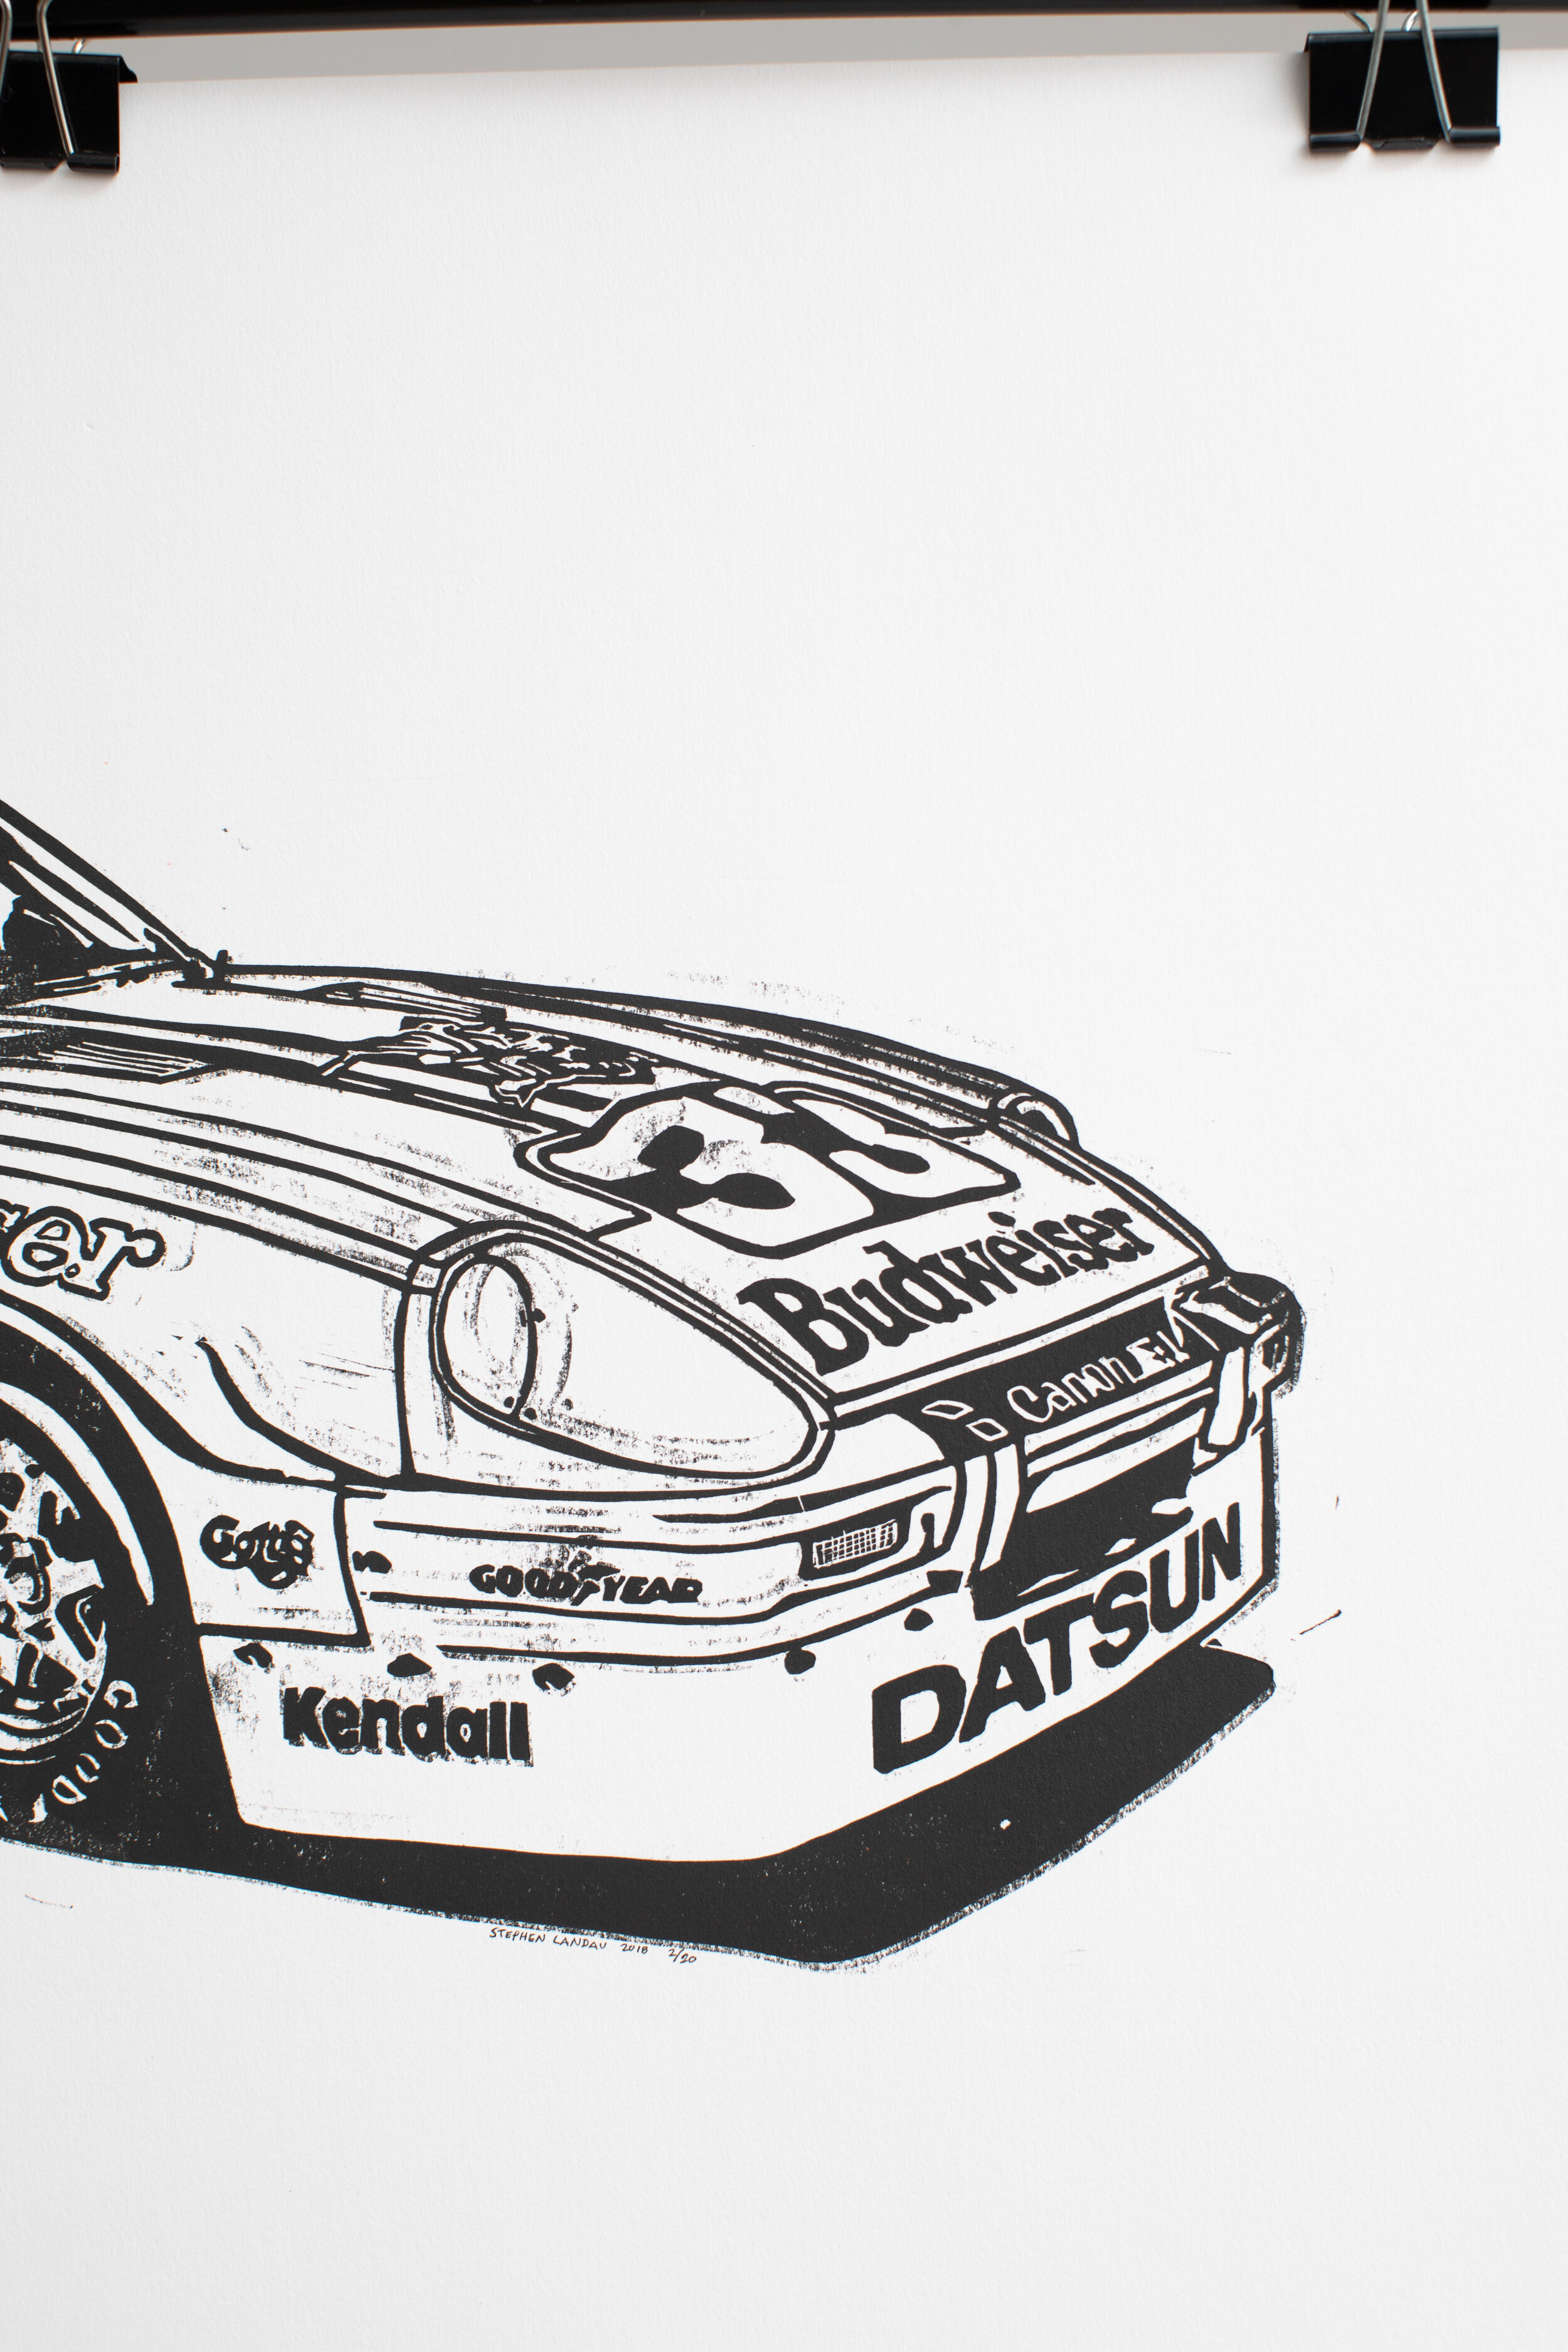 Paul Newman Datsun 280zx — Block Prints